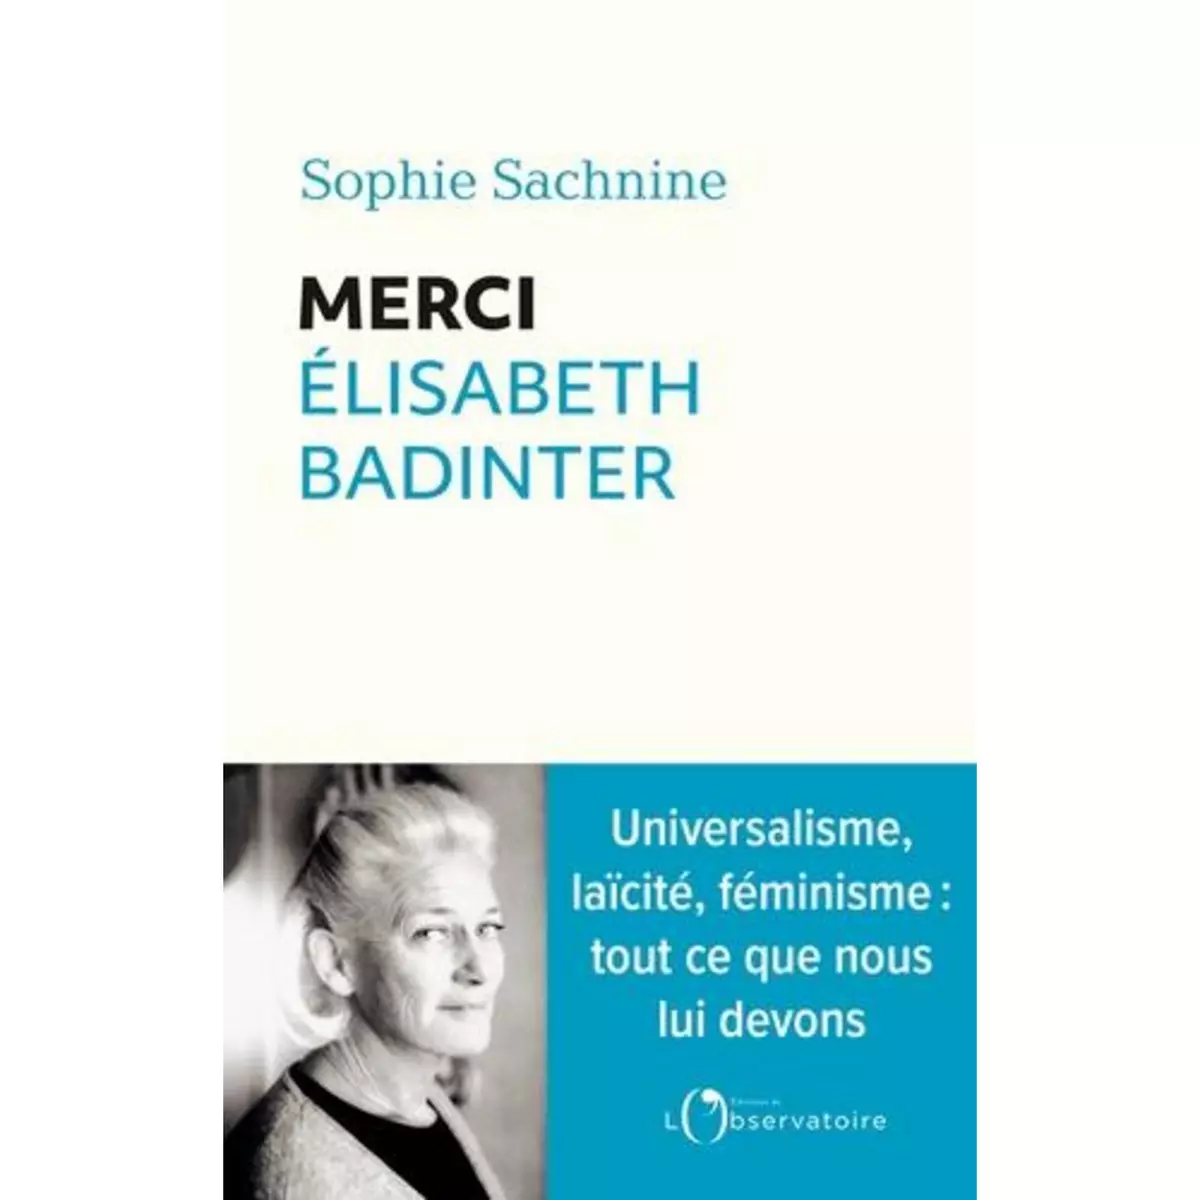  MERCI ELISABETH BADINTER, Sachnine Sophie